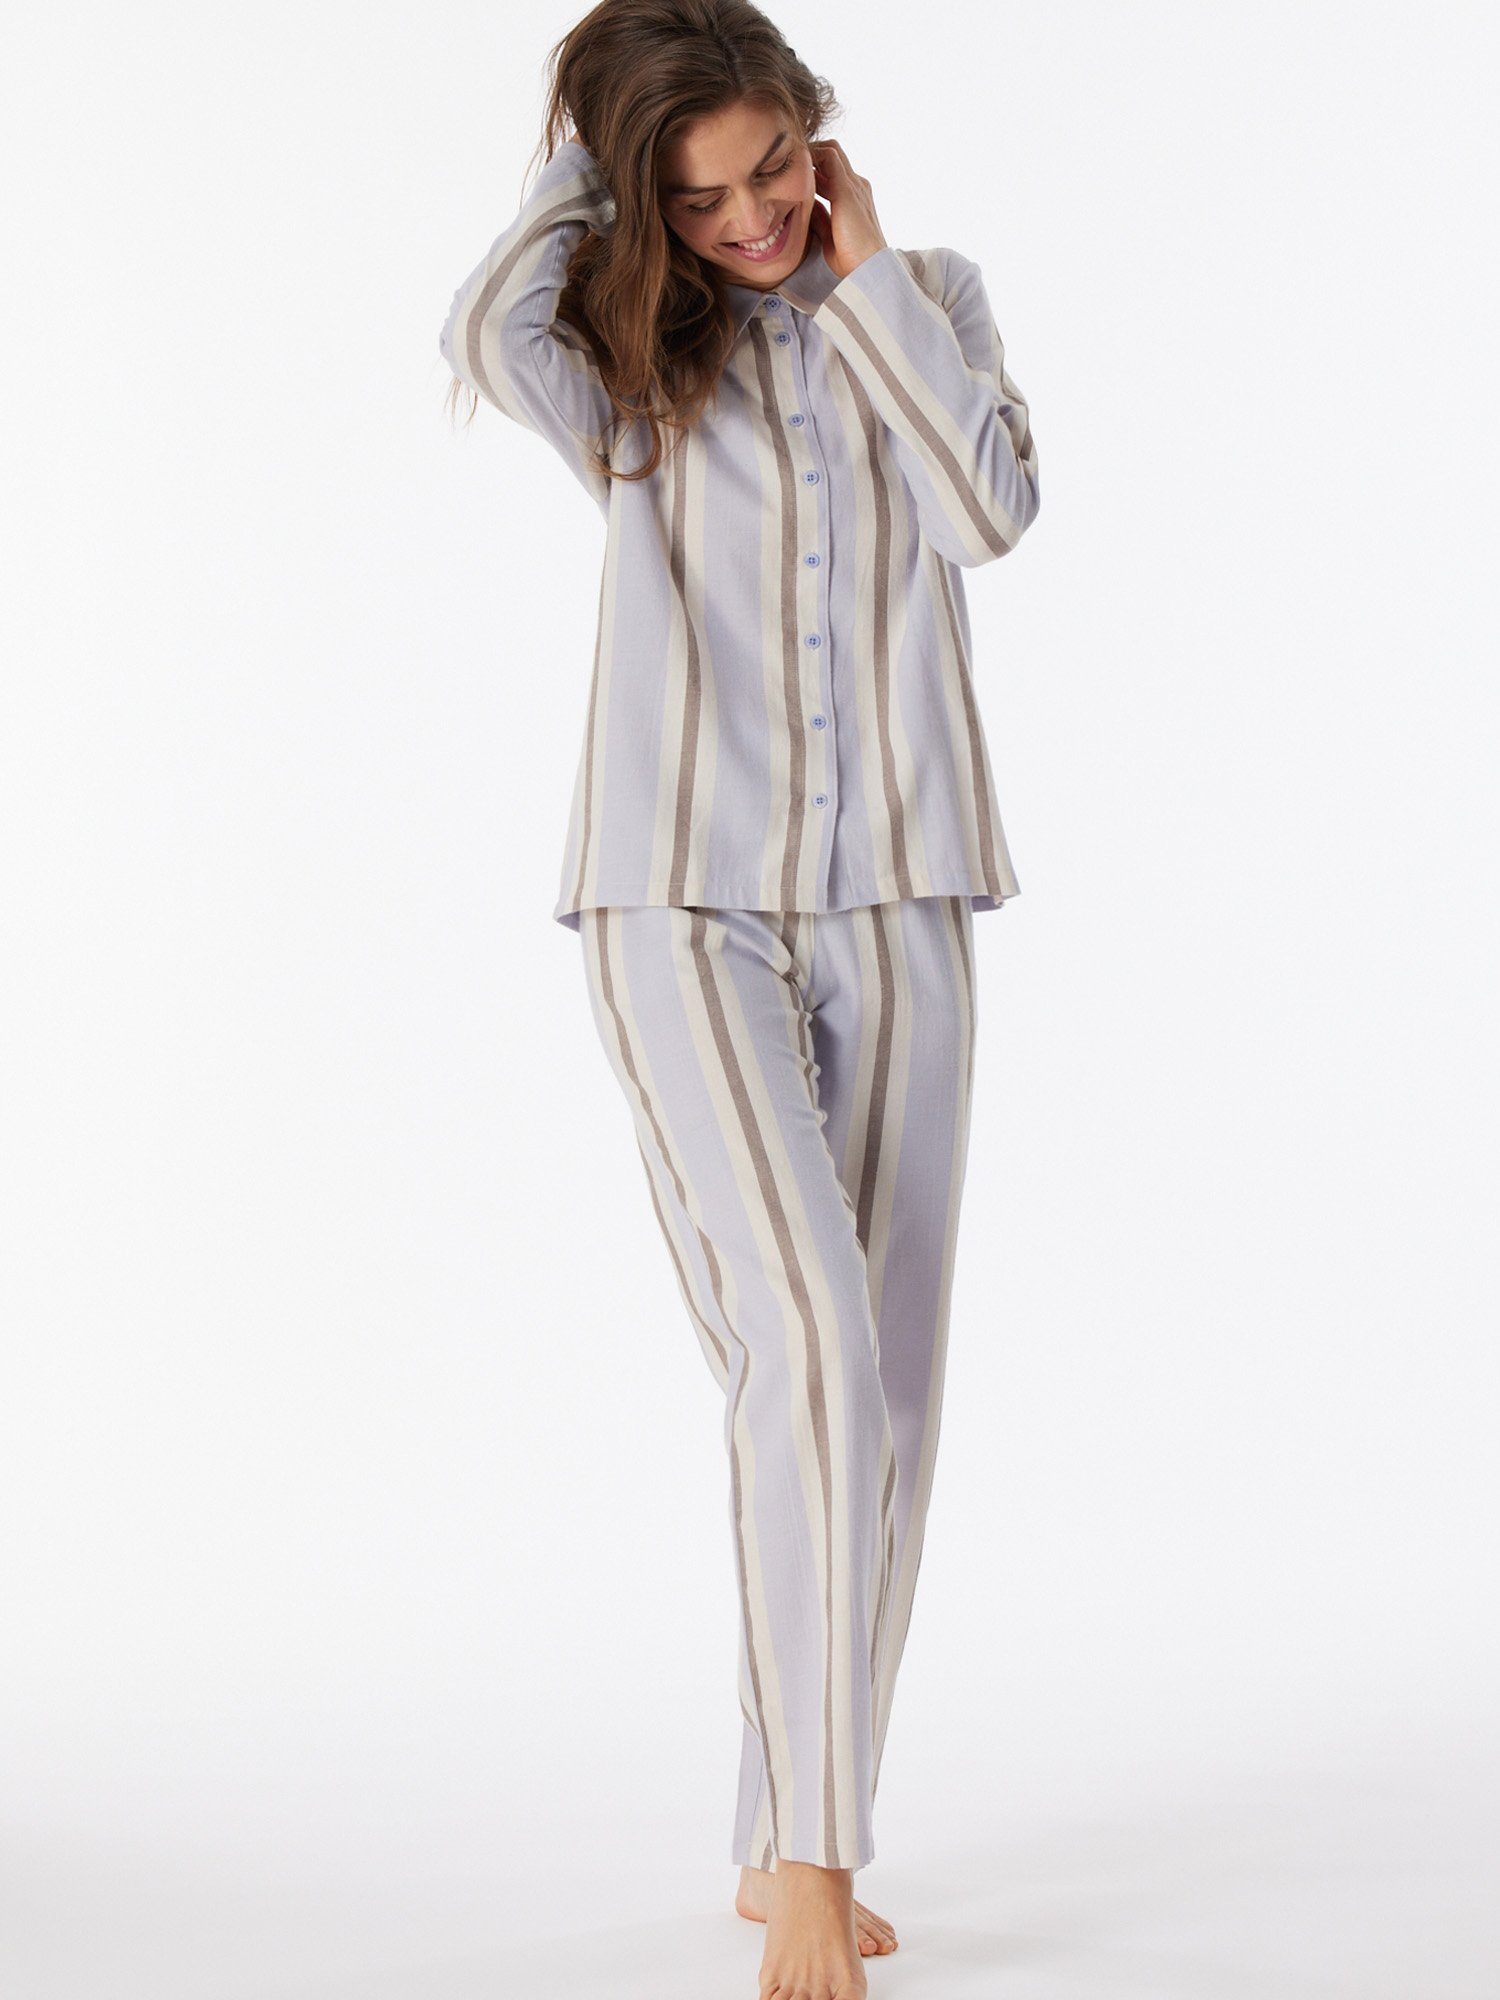 flieder Schiesser Premium Selected Pyjama pyjama schlafmode schlafanzug